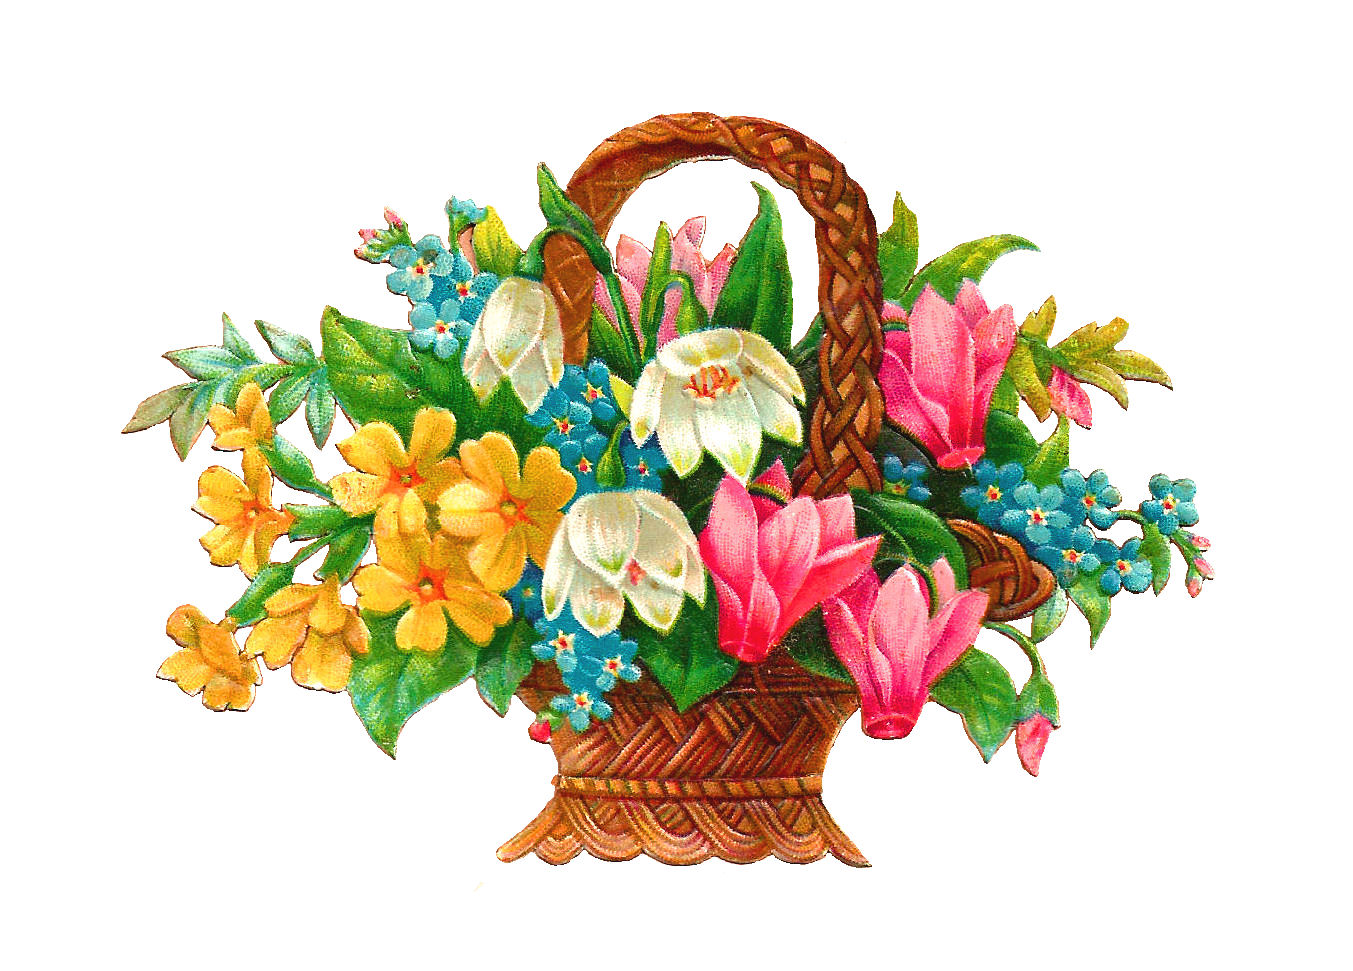 Antique Images: Free Flower Basket Clip Art: 2 Wicket ...